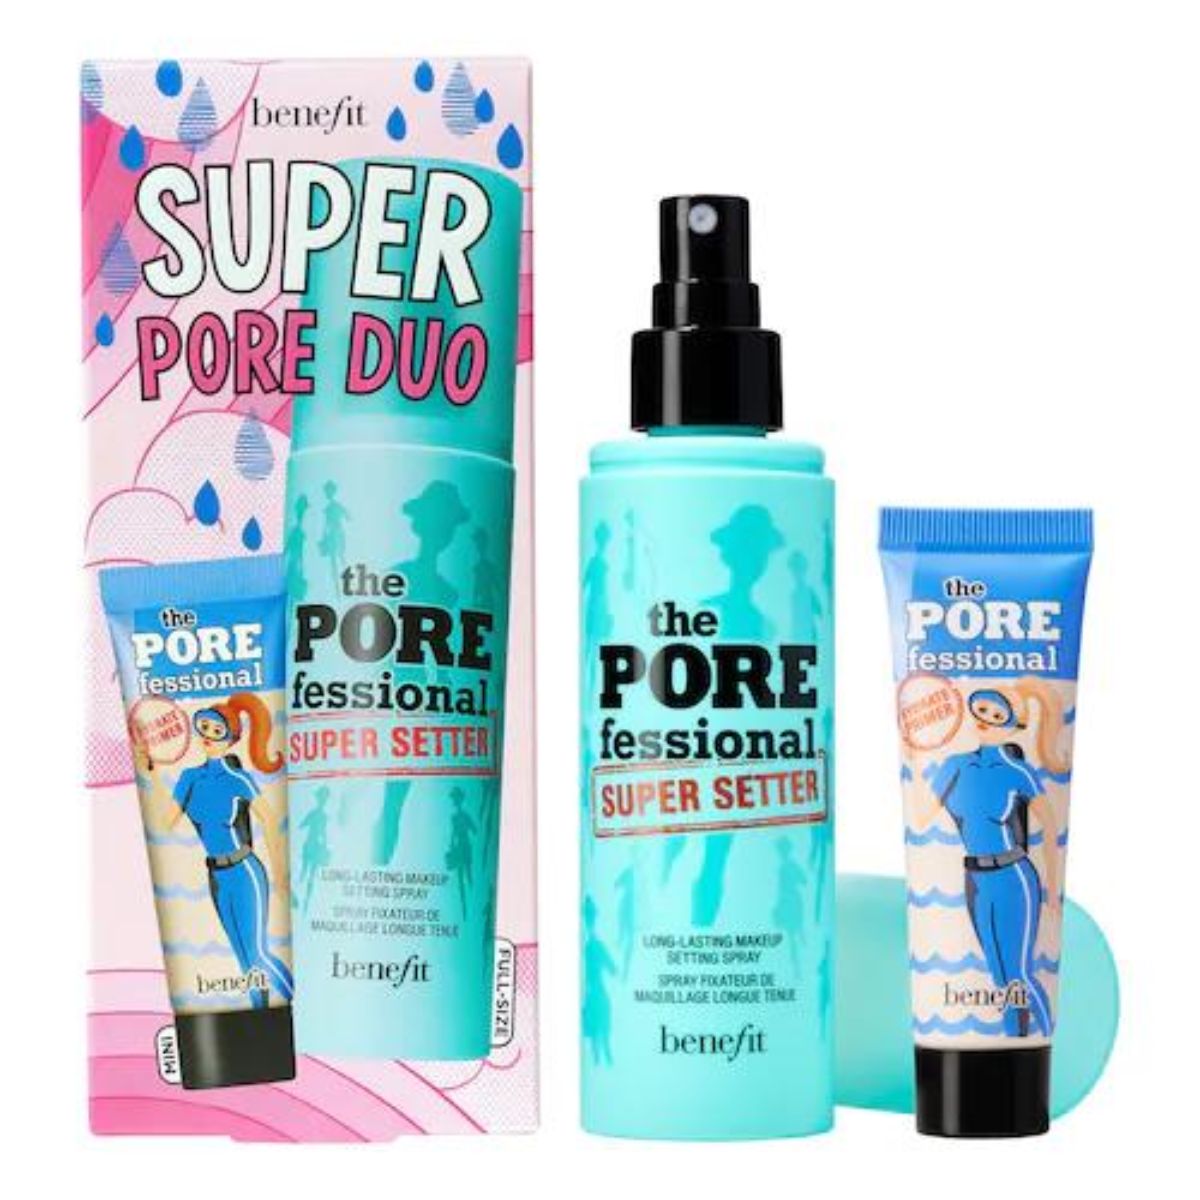 Benefit Super Pore Duo Pore Spray and Hydrate Set.